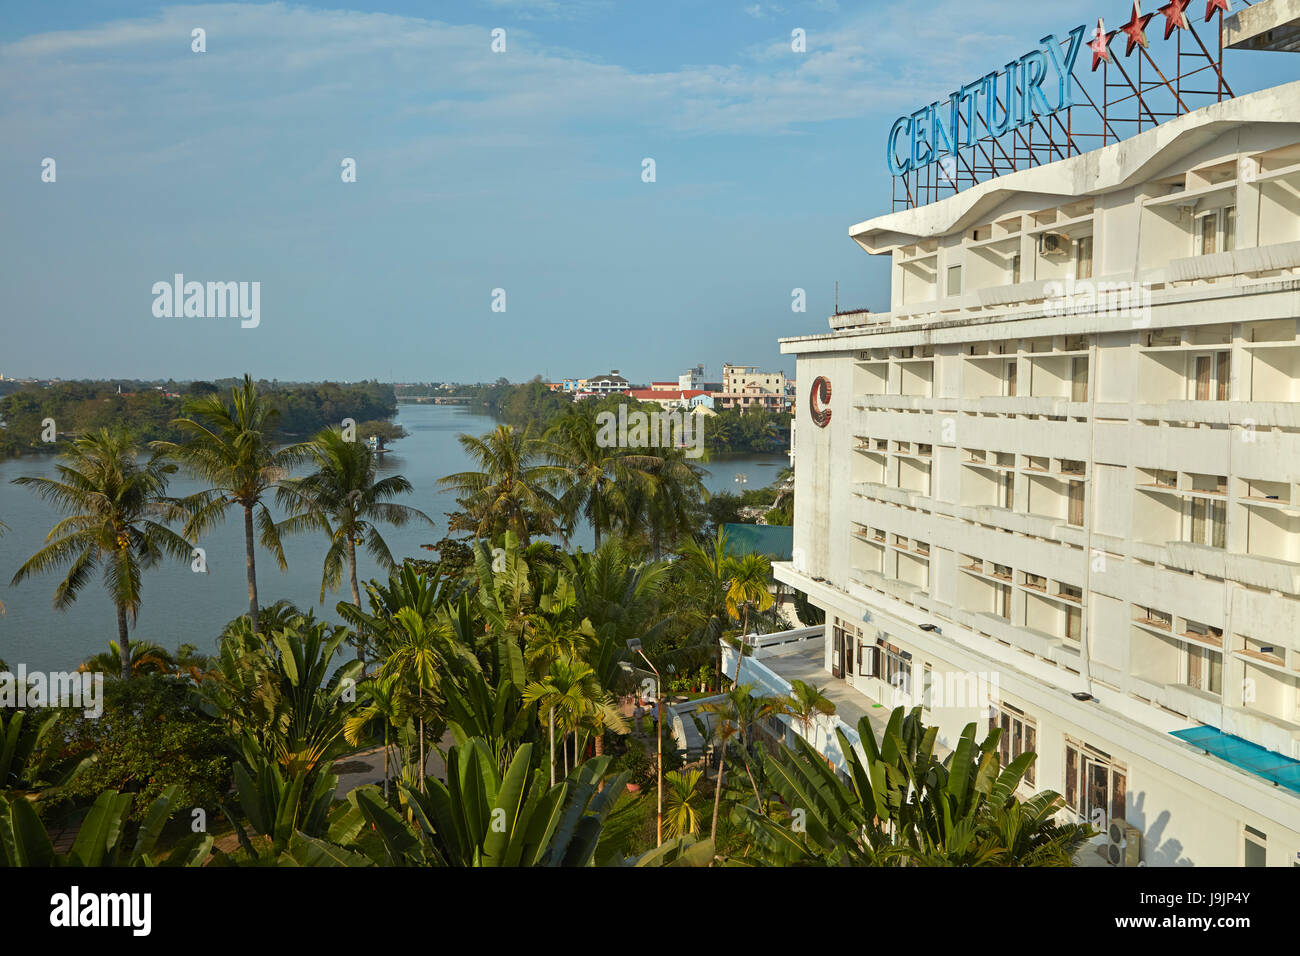 Century Riverside Hotel and Perfume River, Hue, Thua Thien-Hue Province, North Central Coast, Vietnam Stock Photo